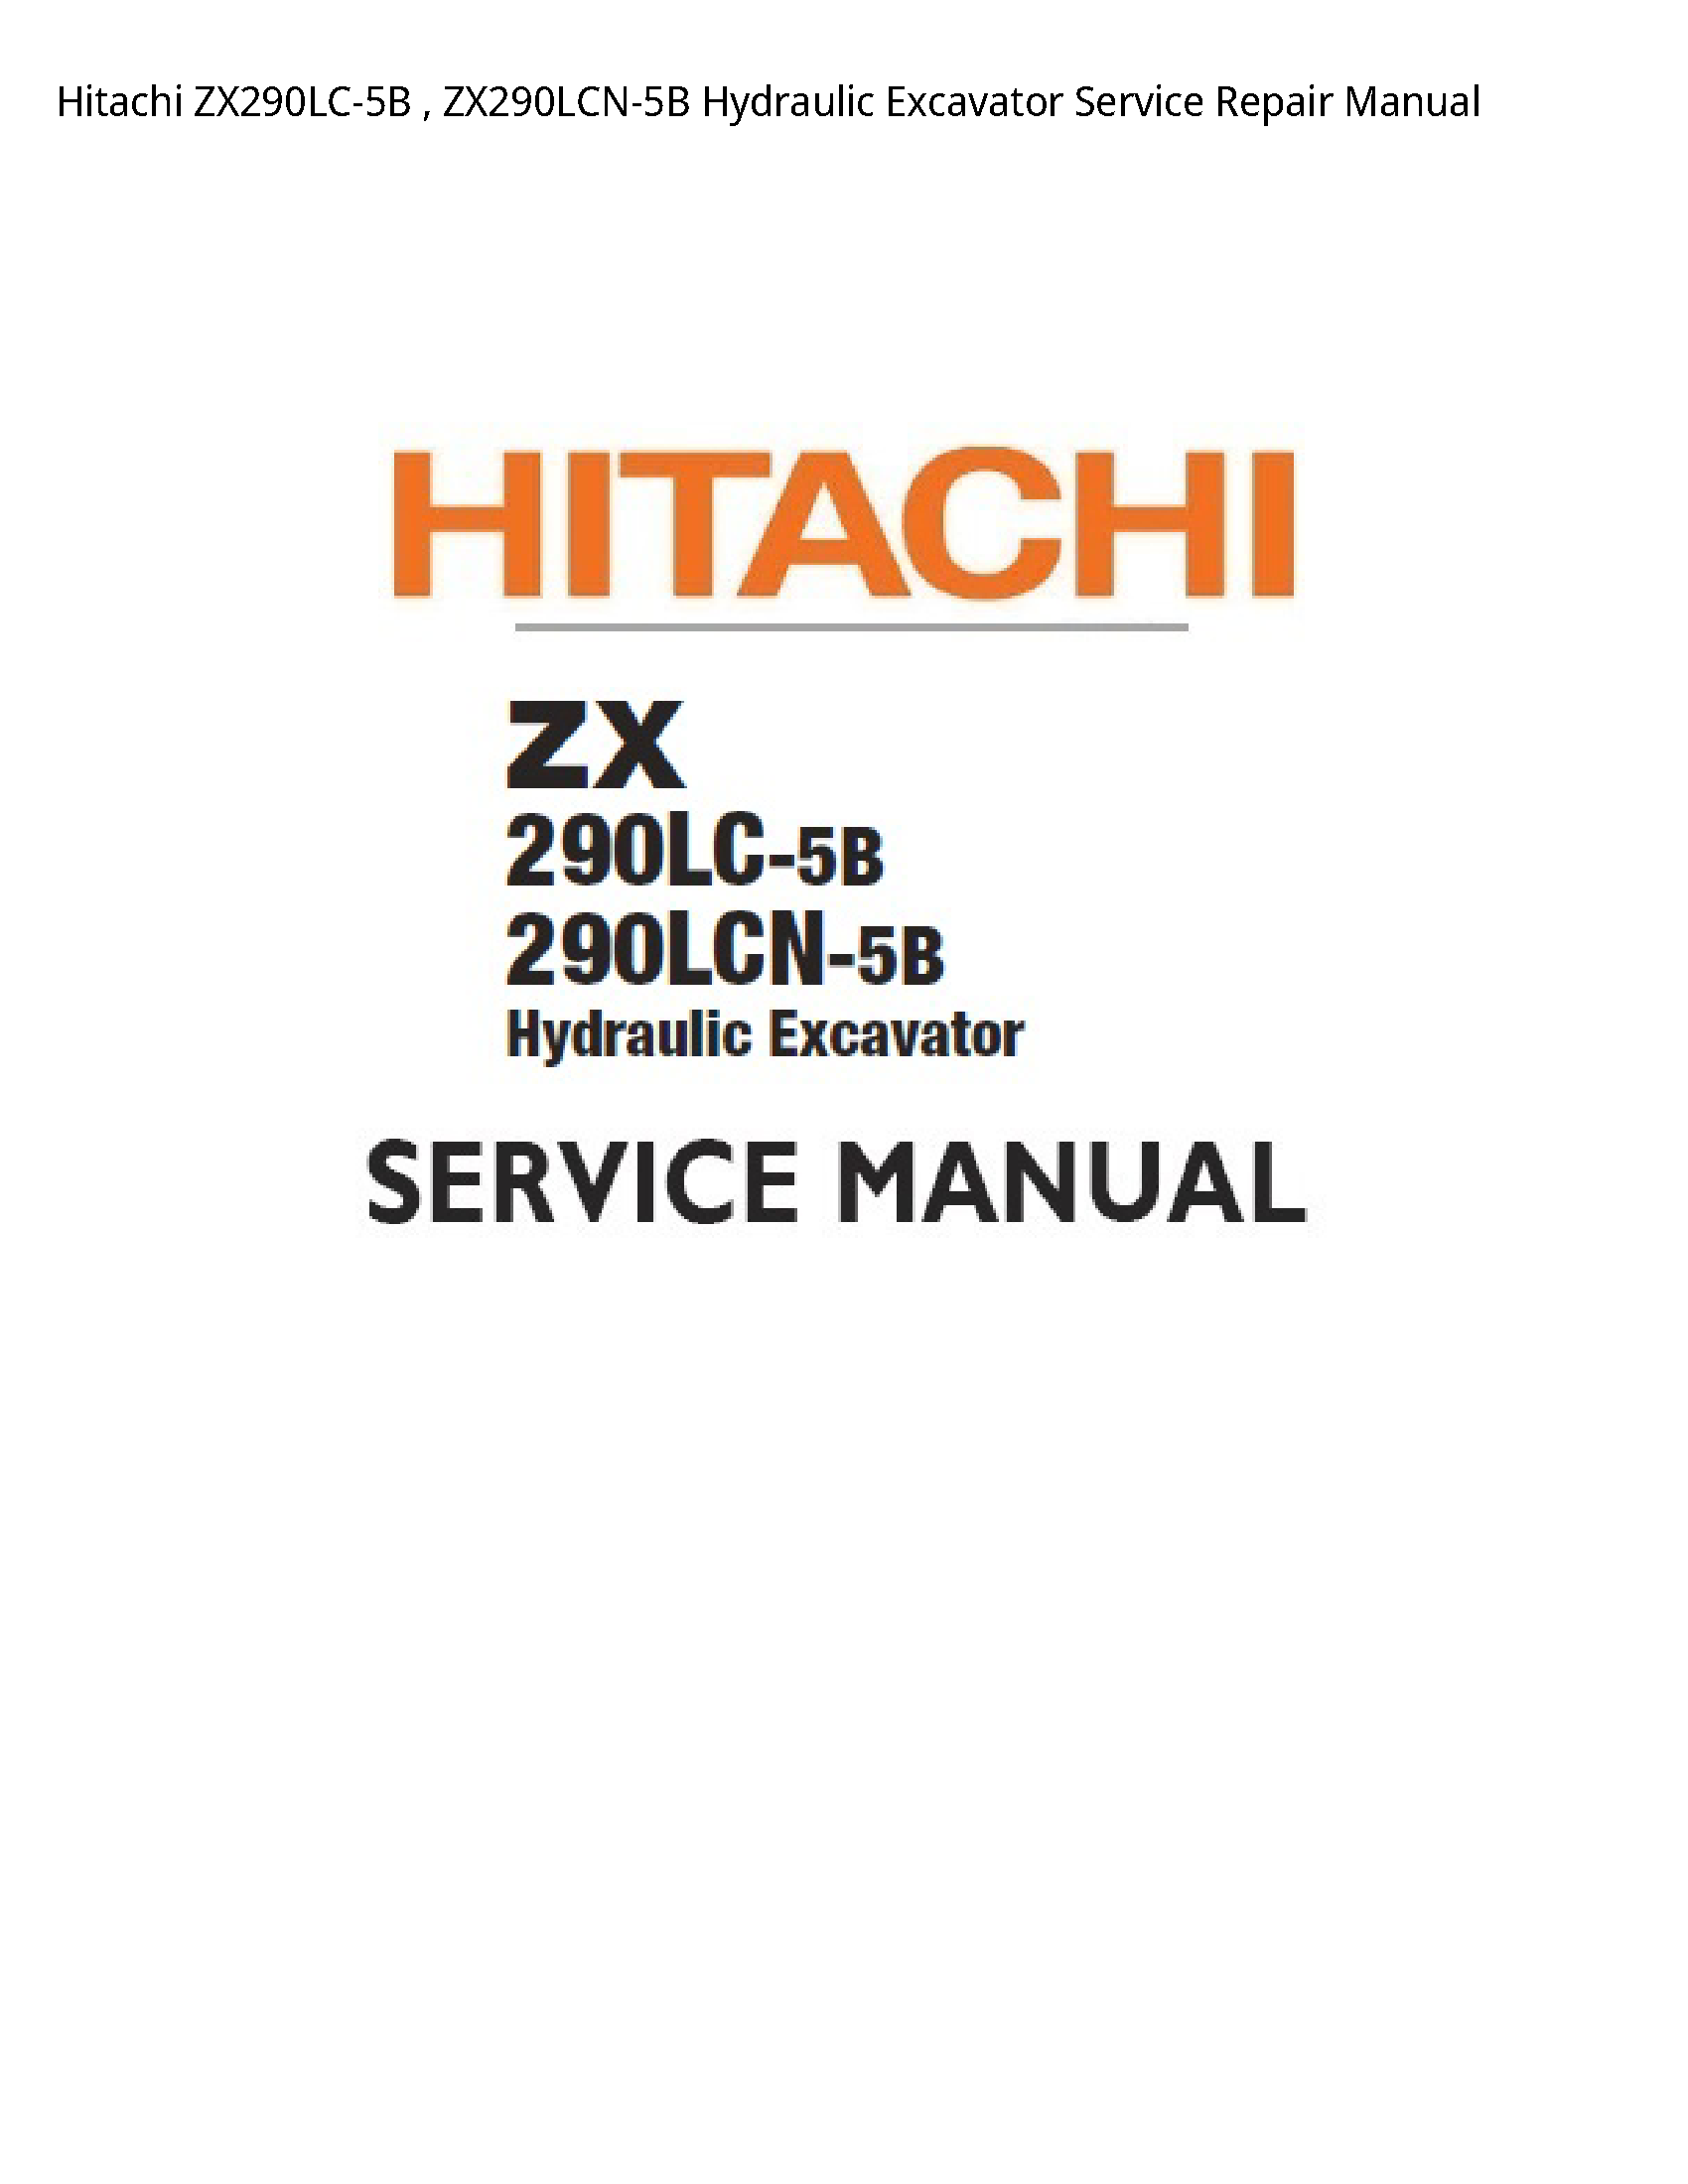 Hitachi ZX290LC-5B Hydraulic Excavator manual